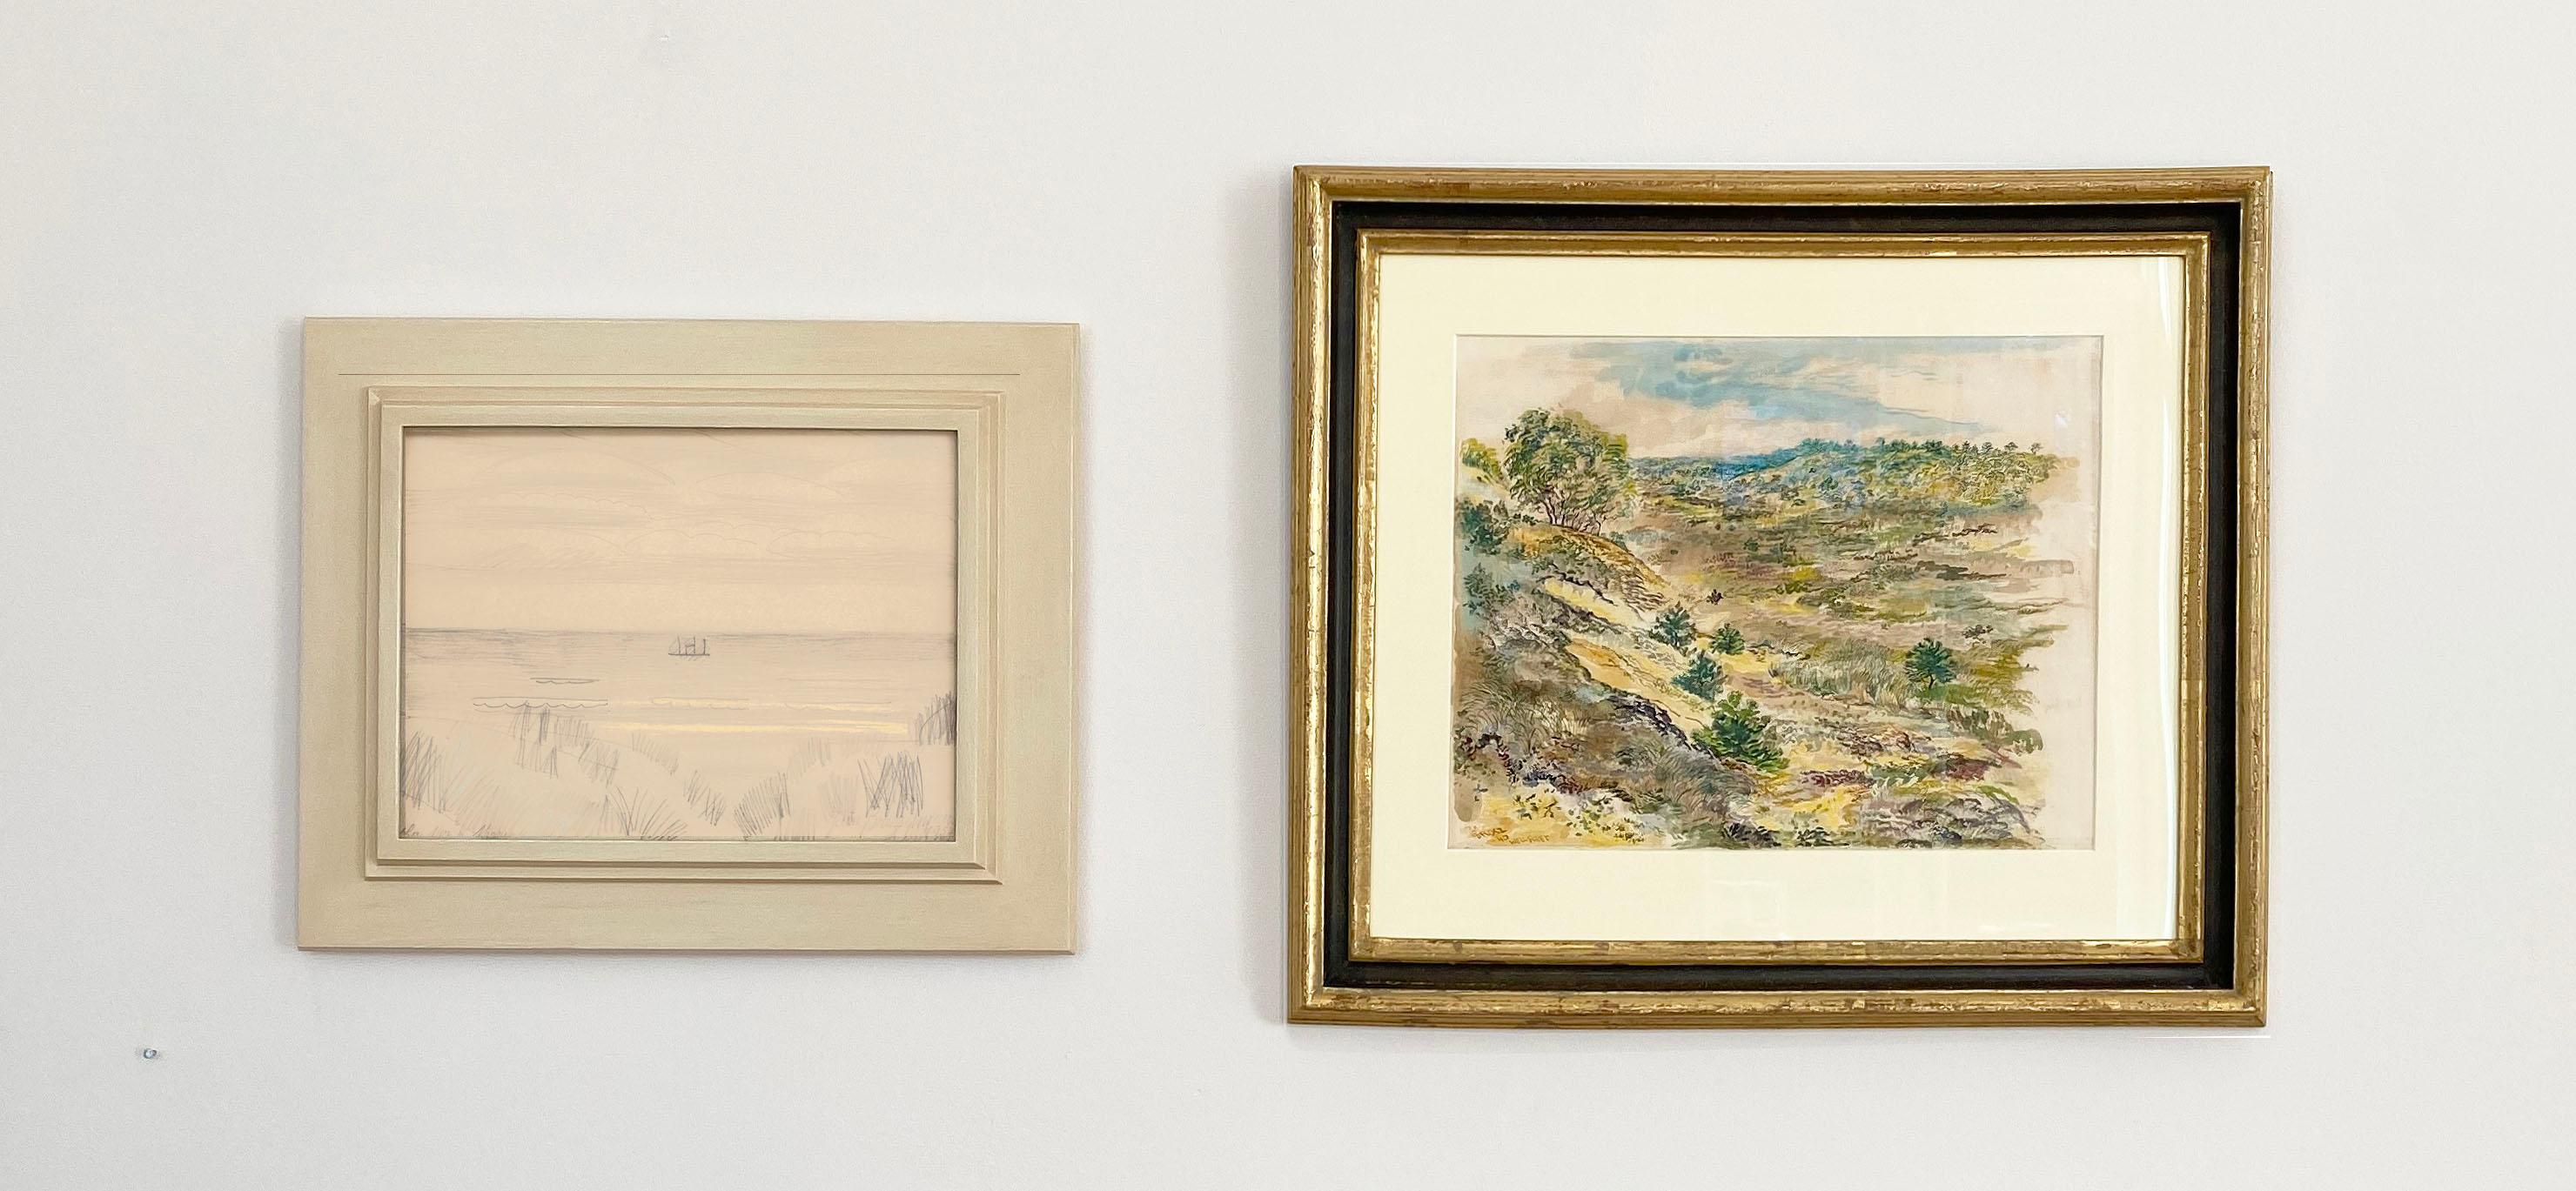 Wellfleet, George Grosz, 1940 (Modernist Landscape Watercolour) For Sale 6